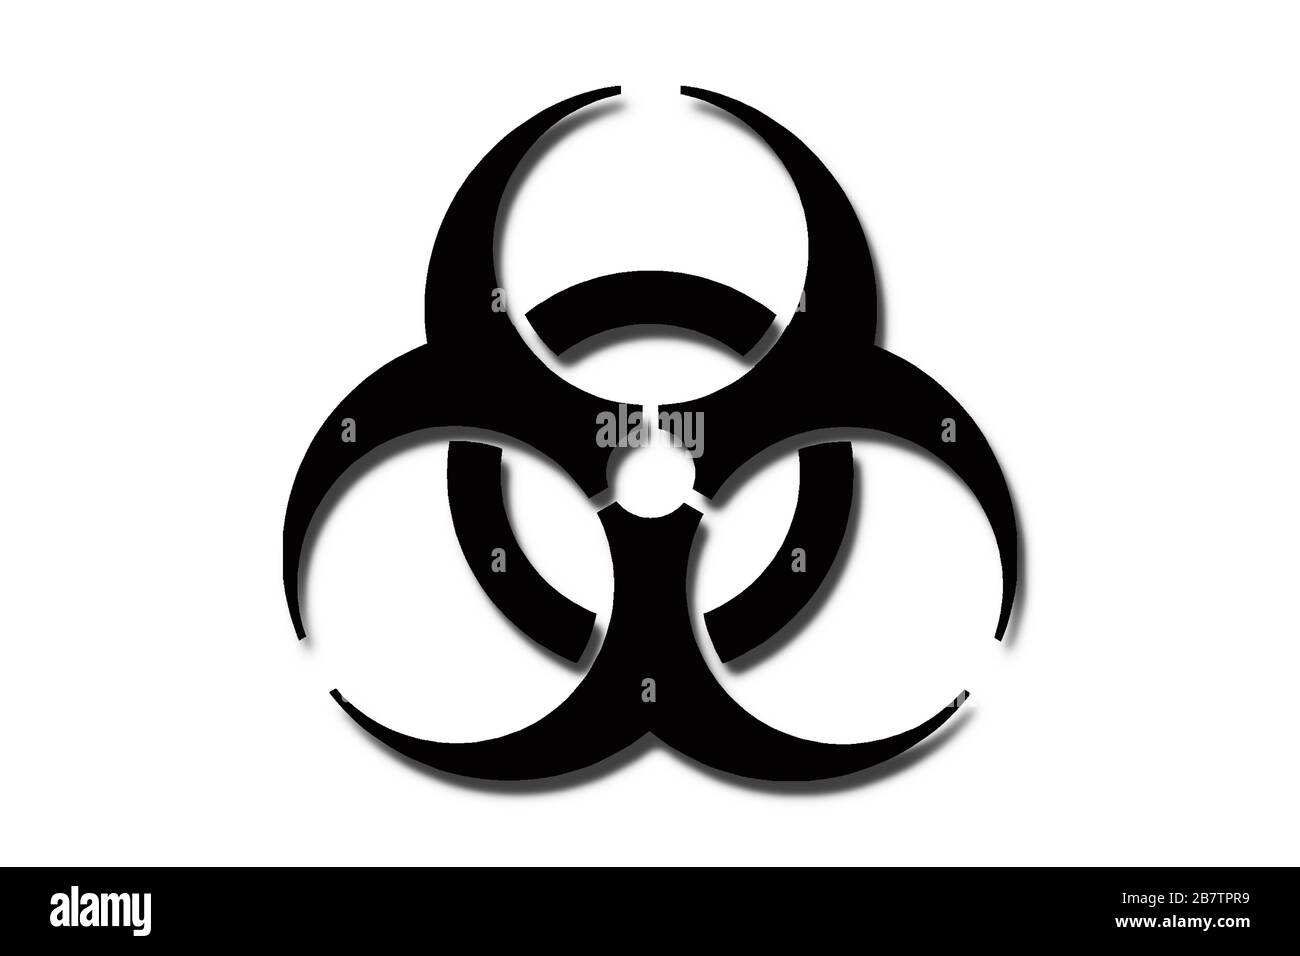 Biohazard symbol Stock Photo